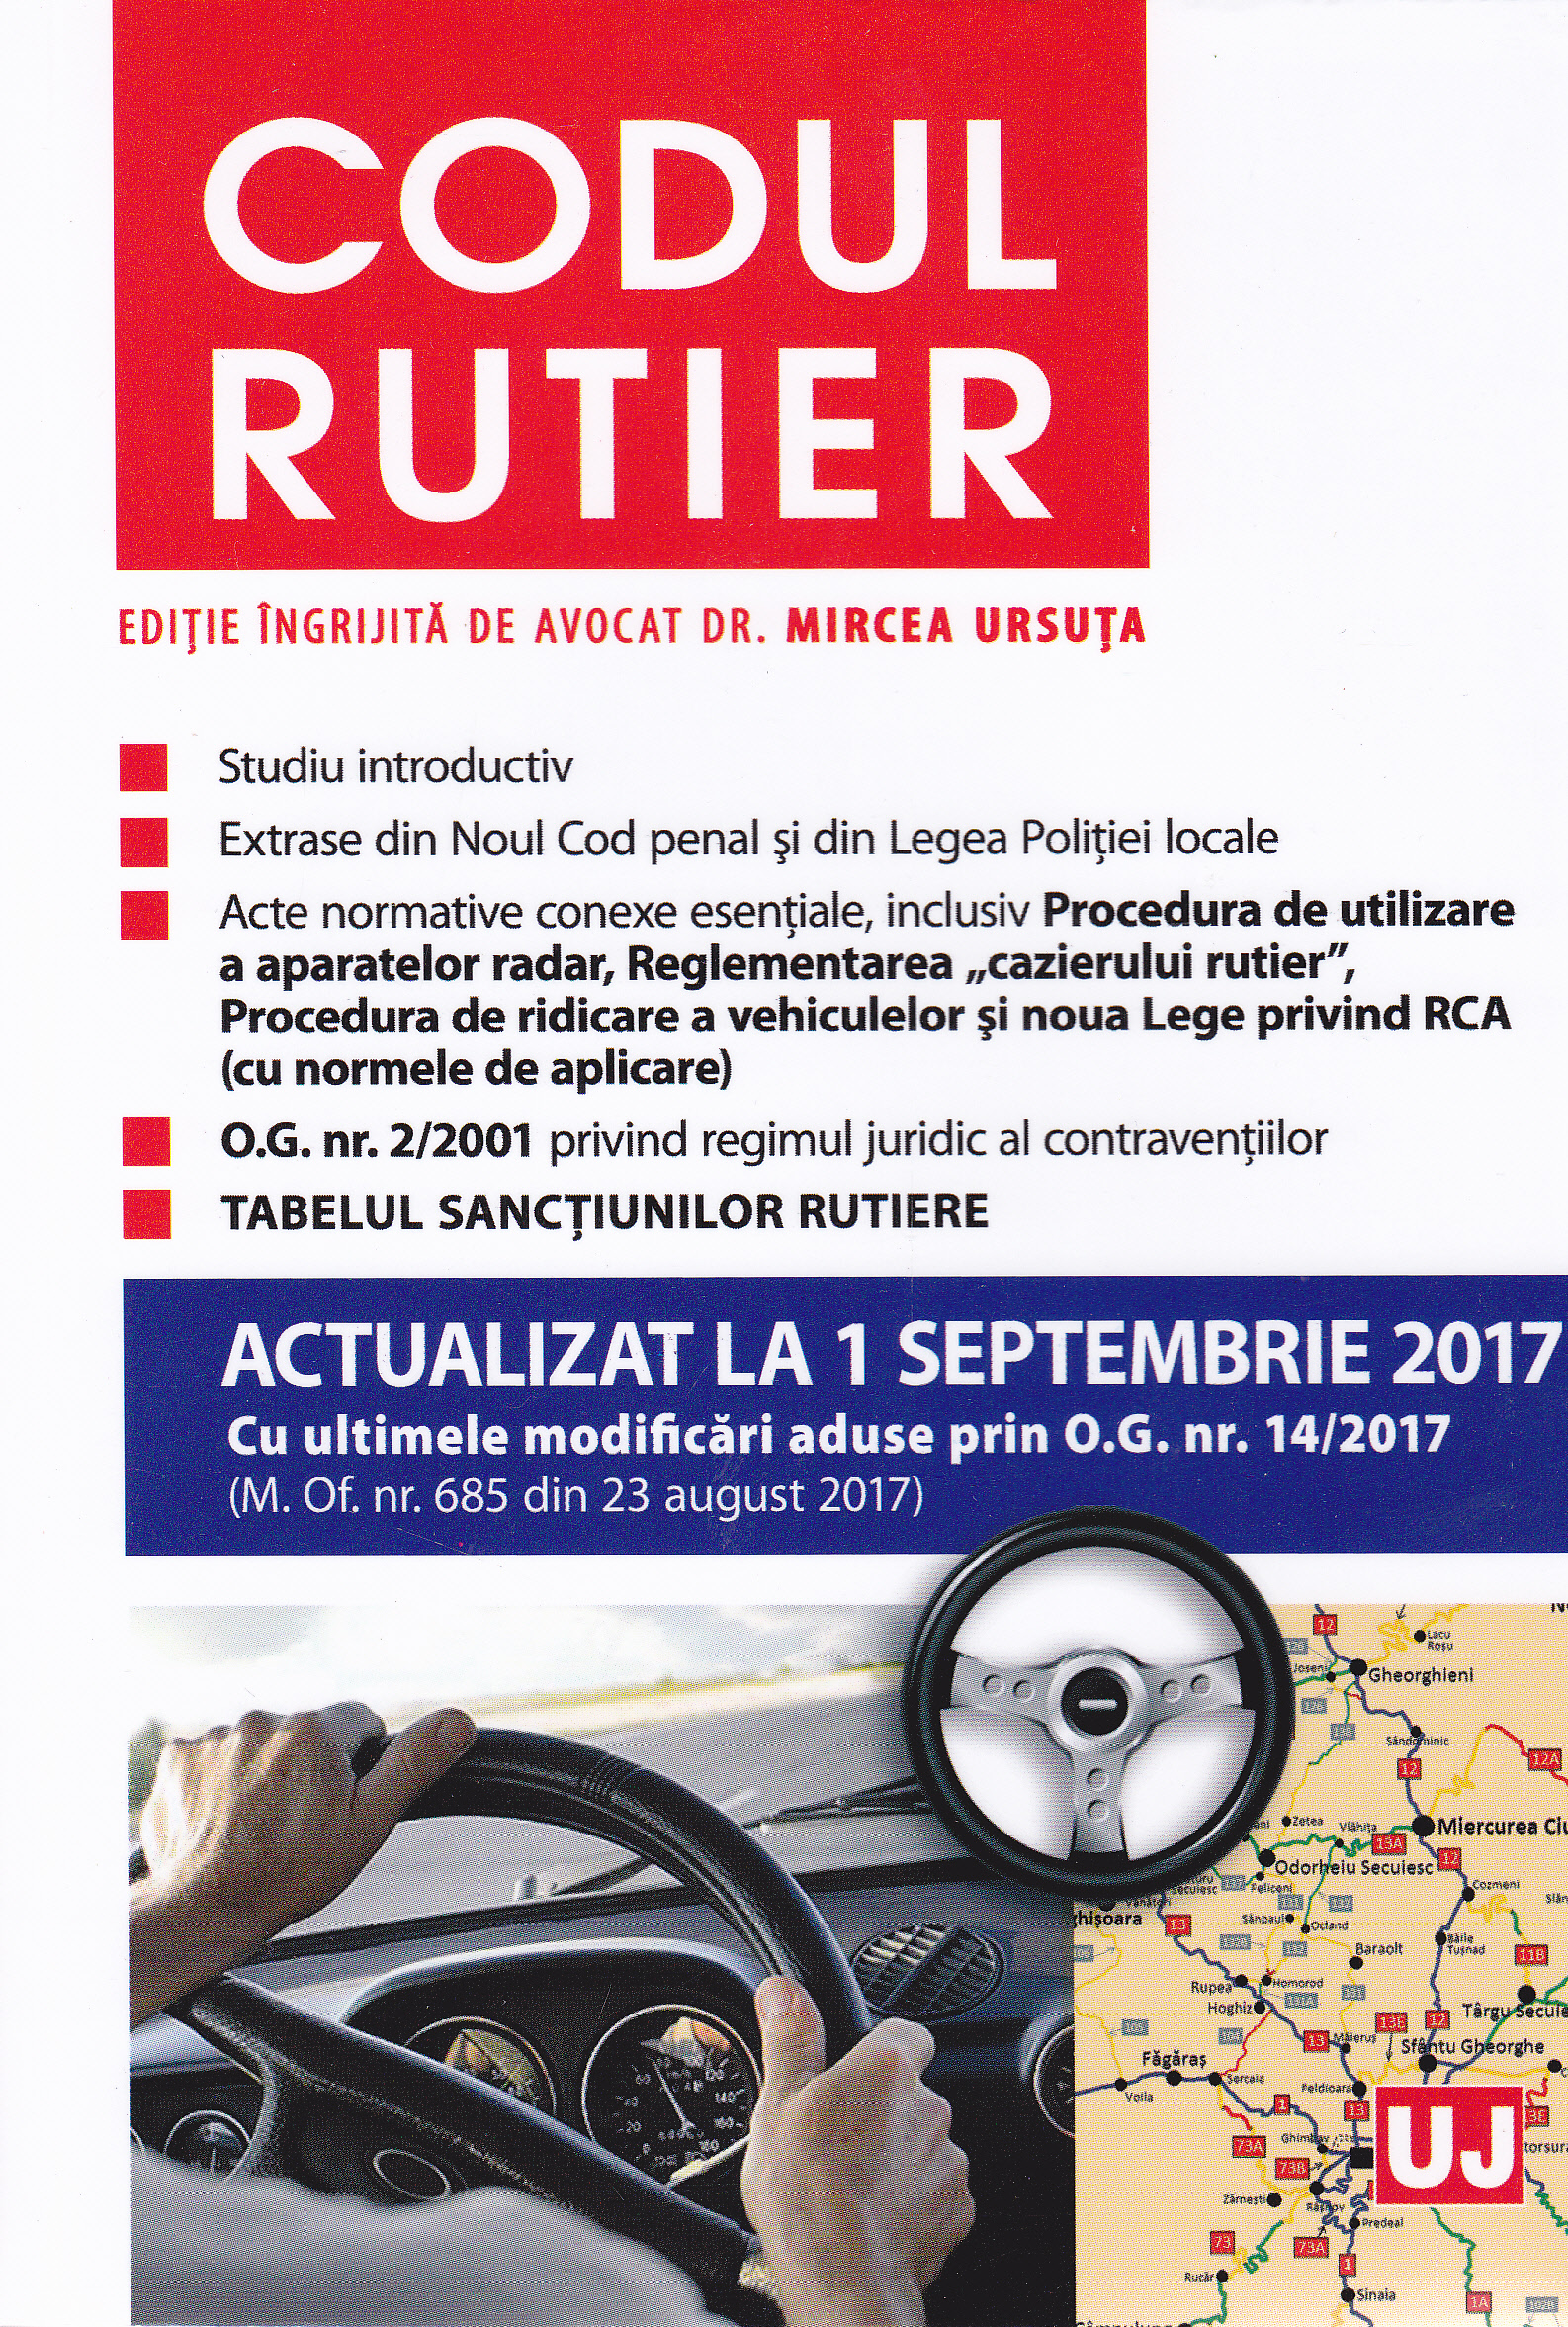 Codul rutier act. 1 septembrie 2017 - Mircea Ursuta